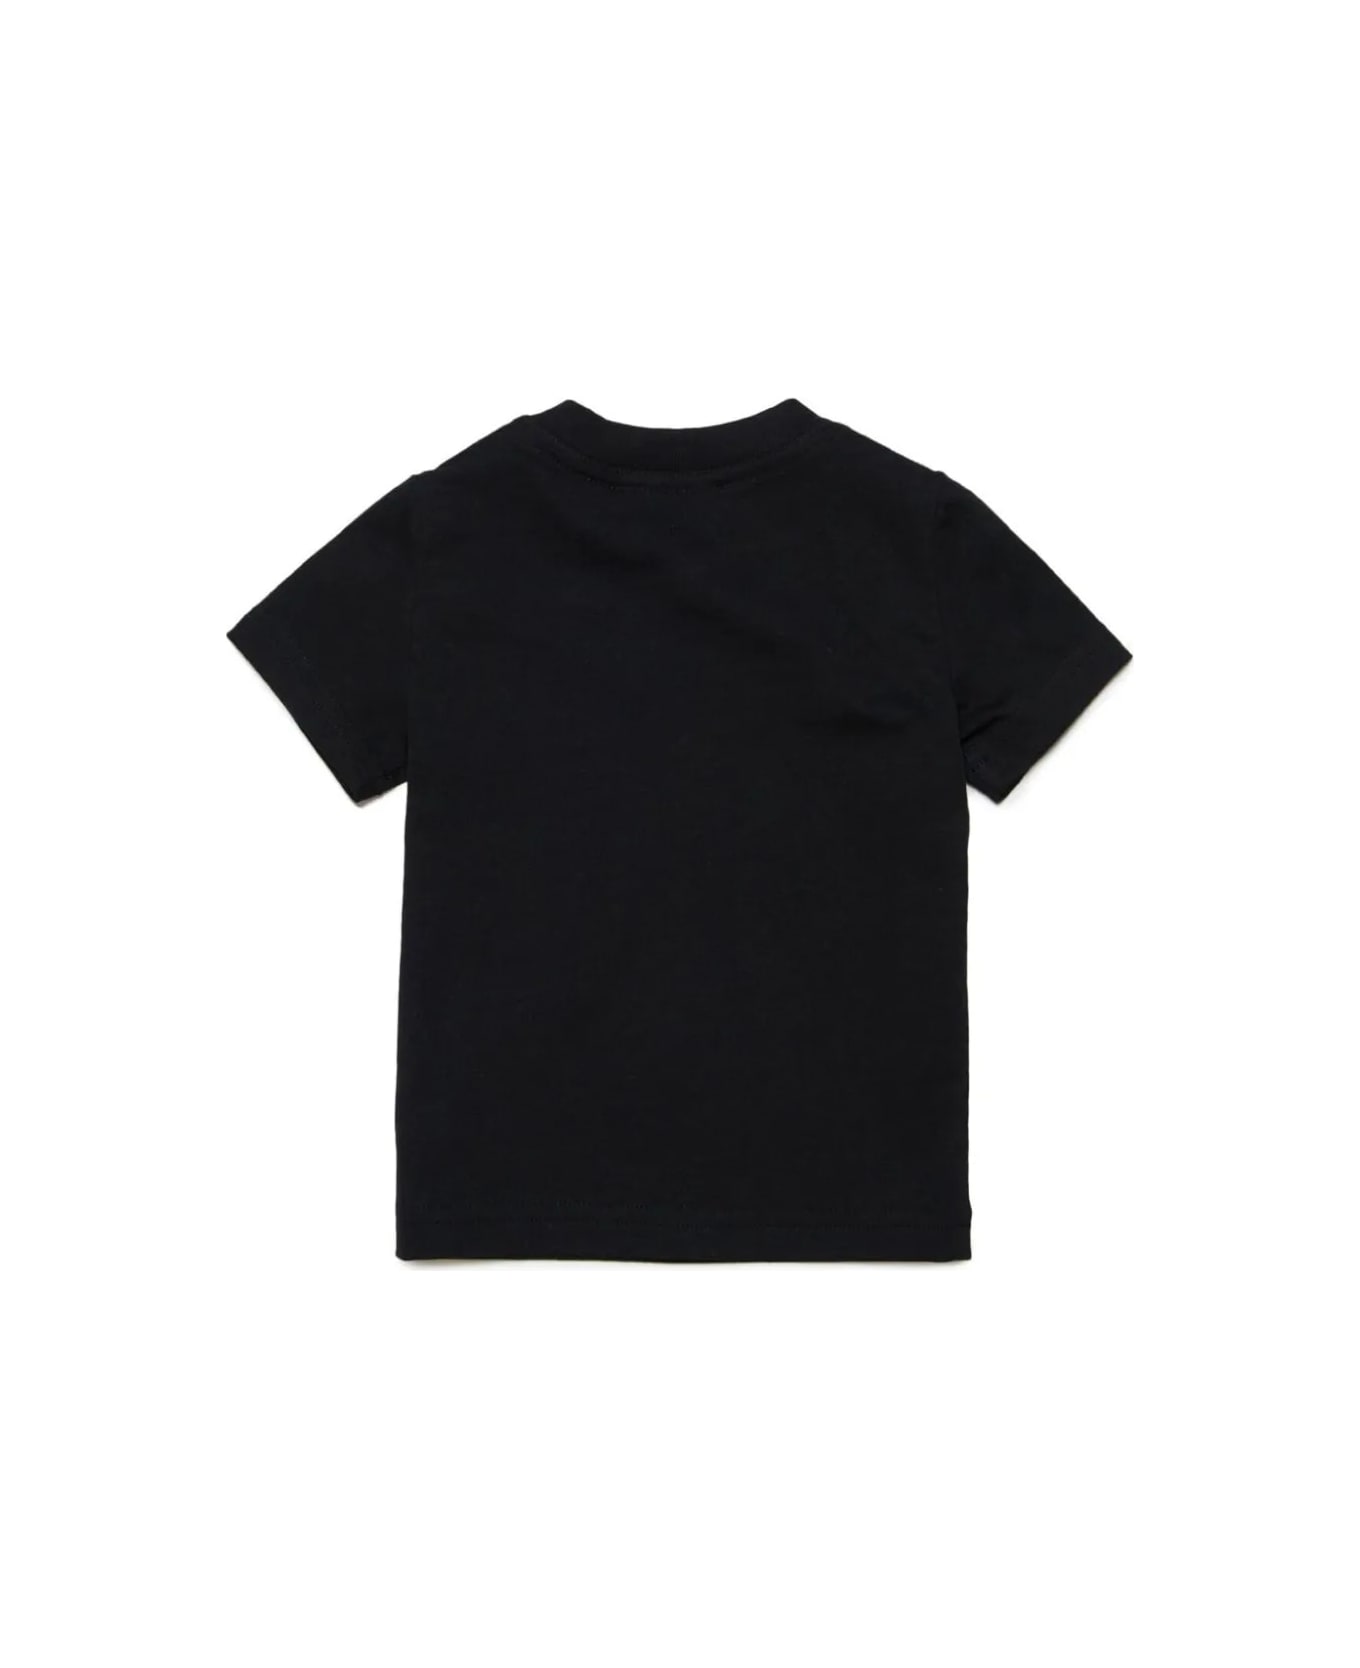 Dsquared2 Black T-shirt With Dsquared2 Print - Black